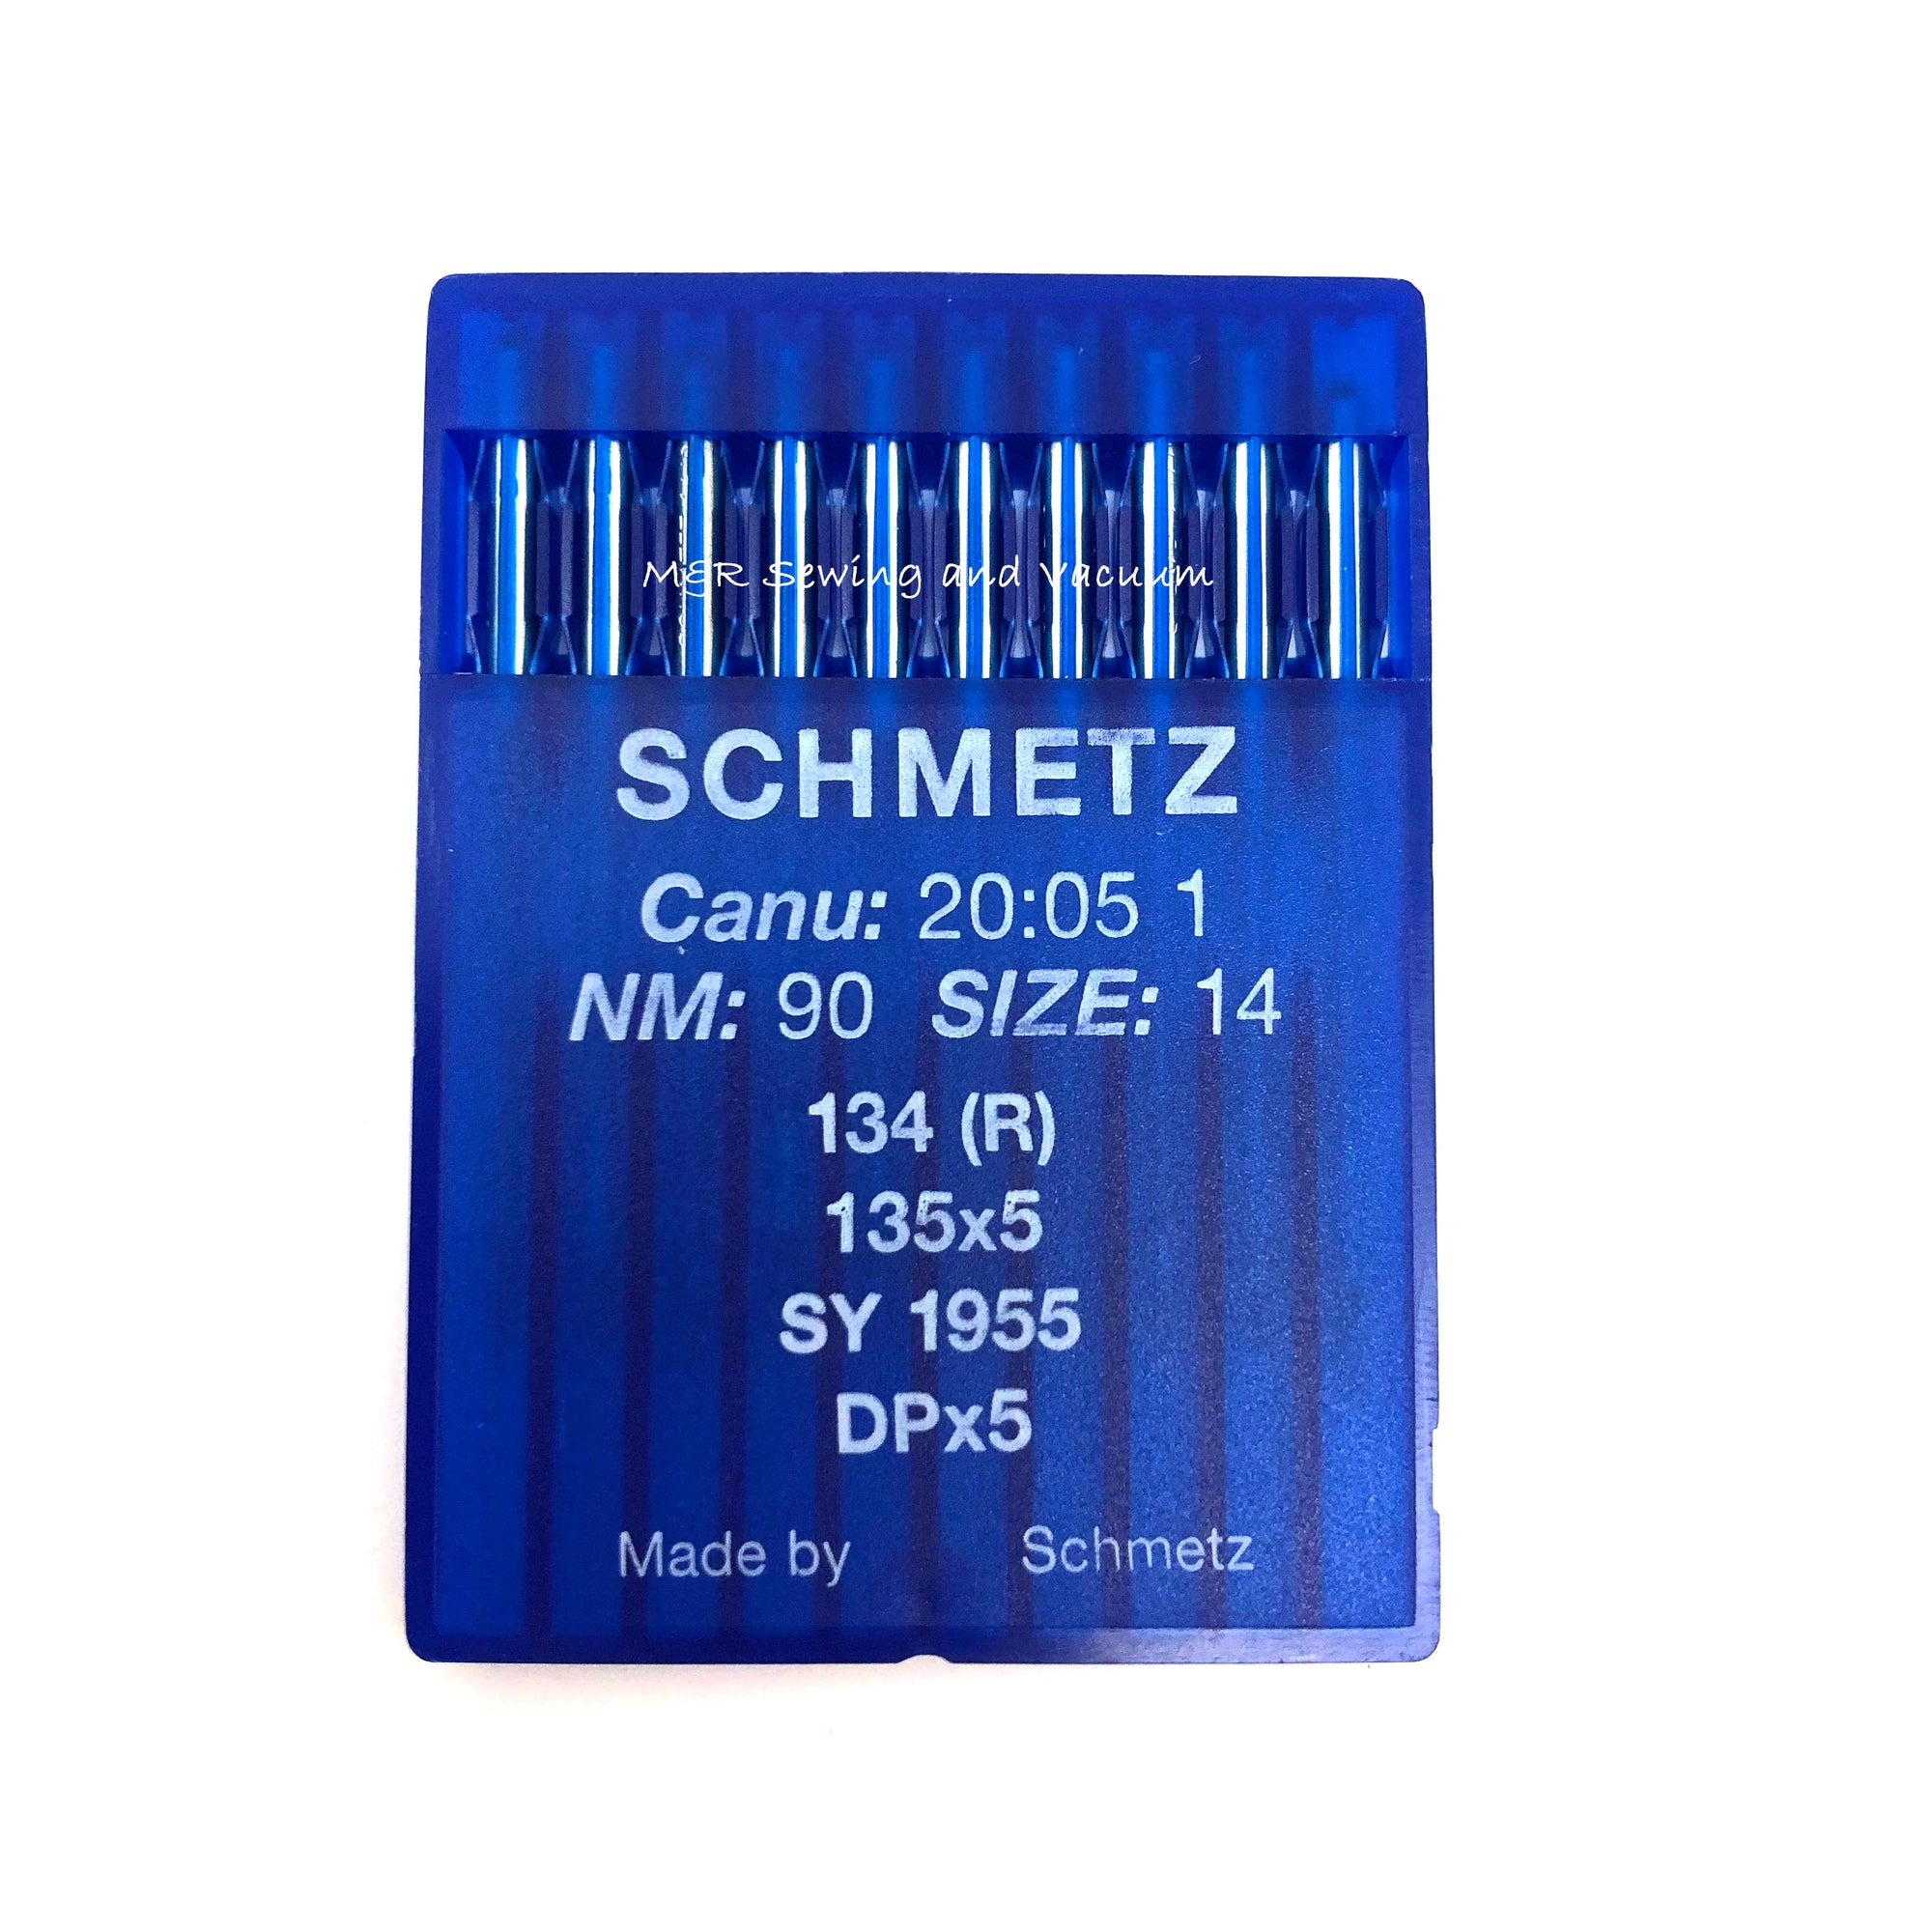 Schmetz 135x5 (DPx5) Industrial Needles - 90/14